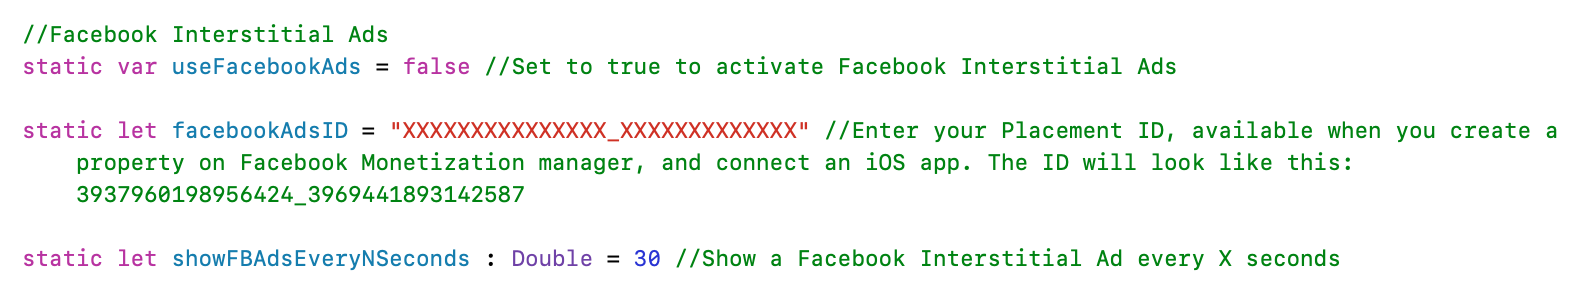 Facebook Ads configuration screenshot